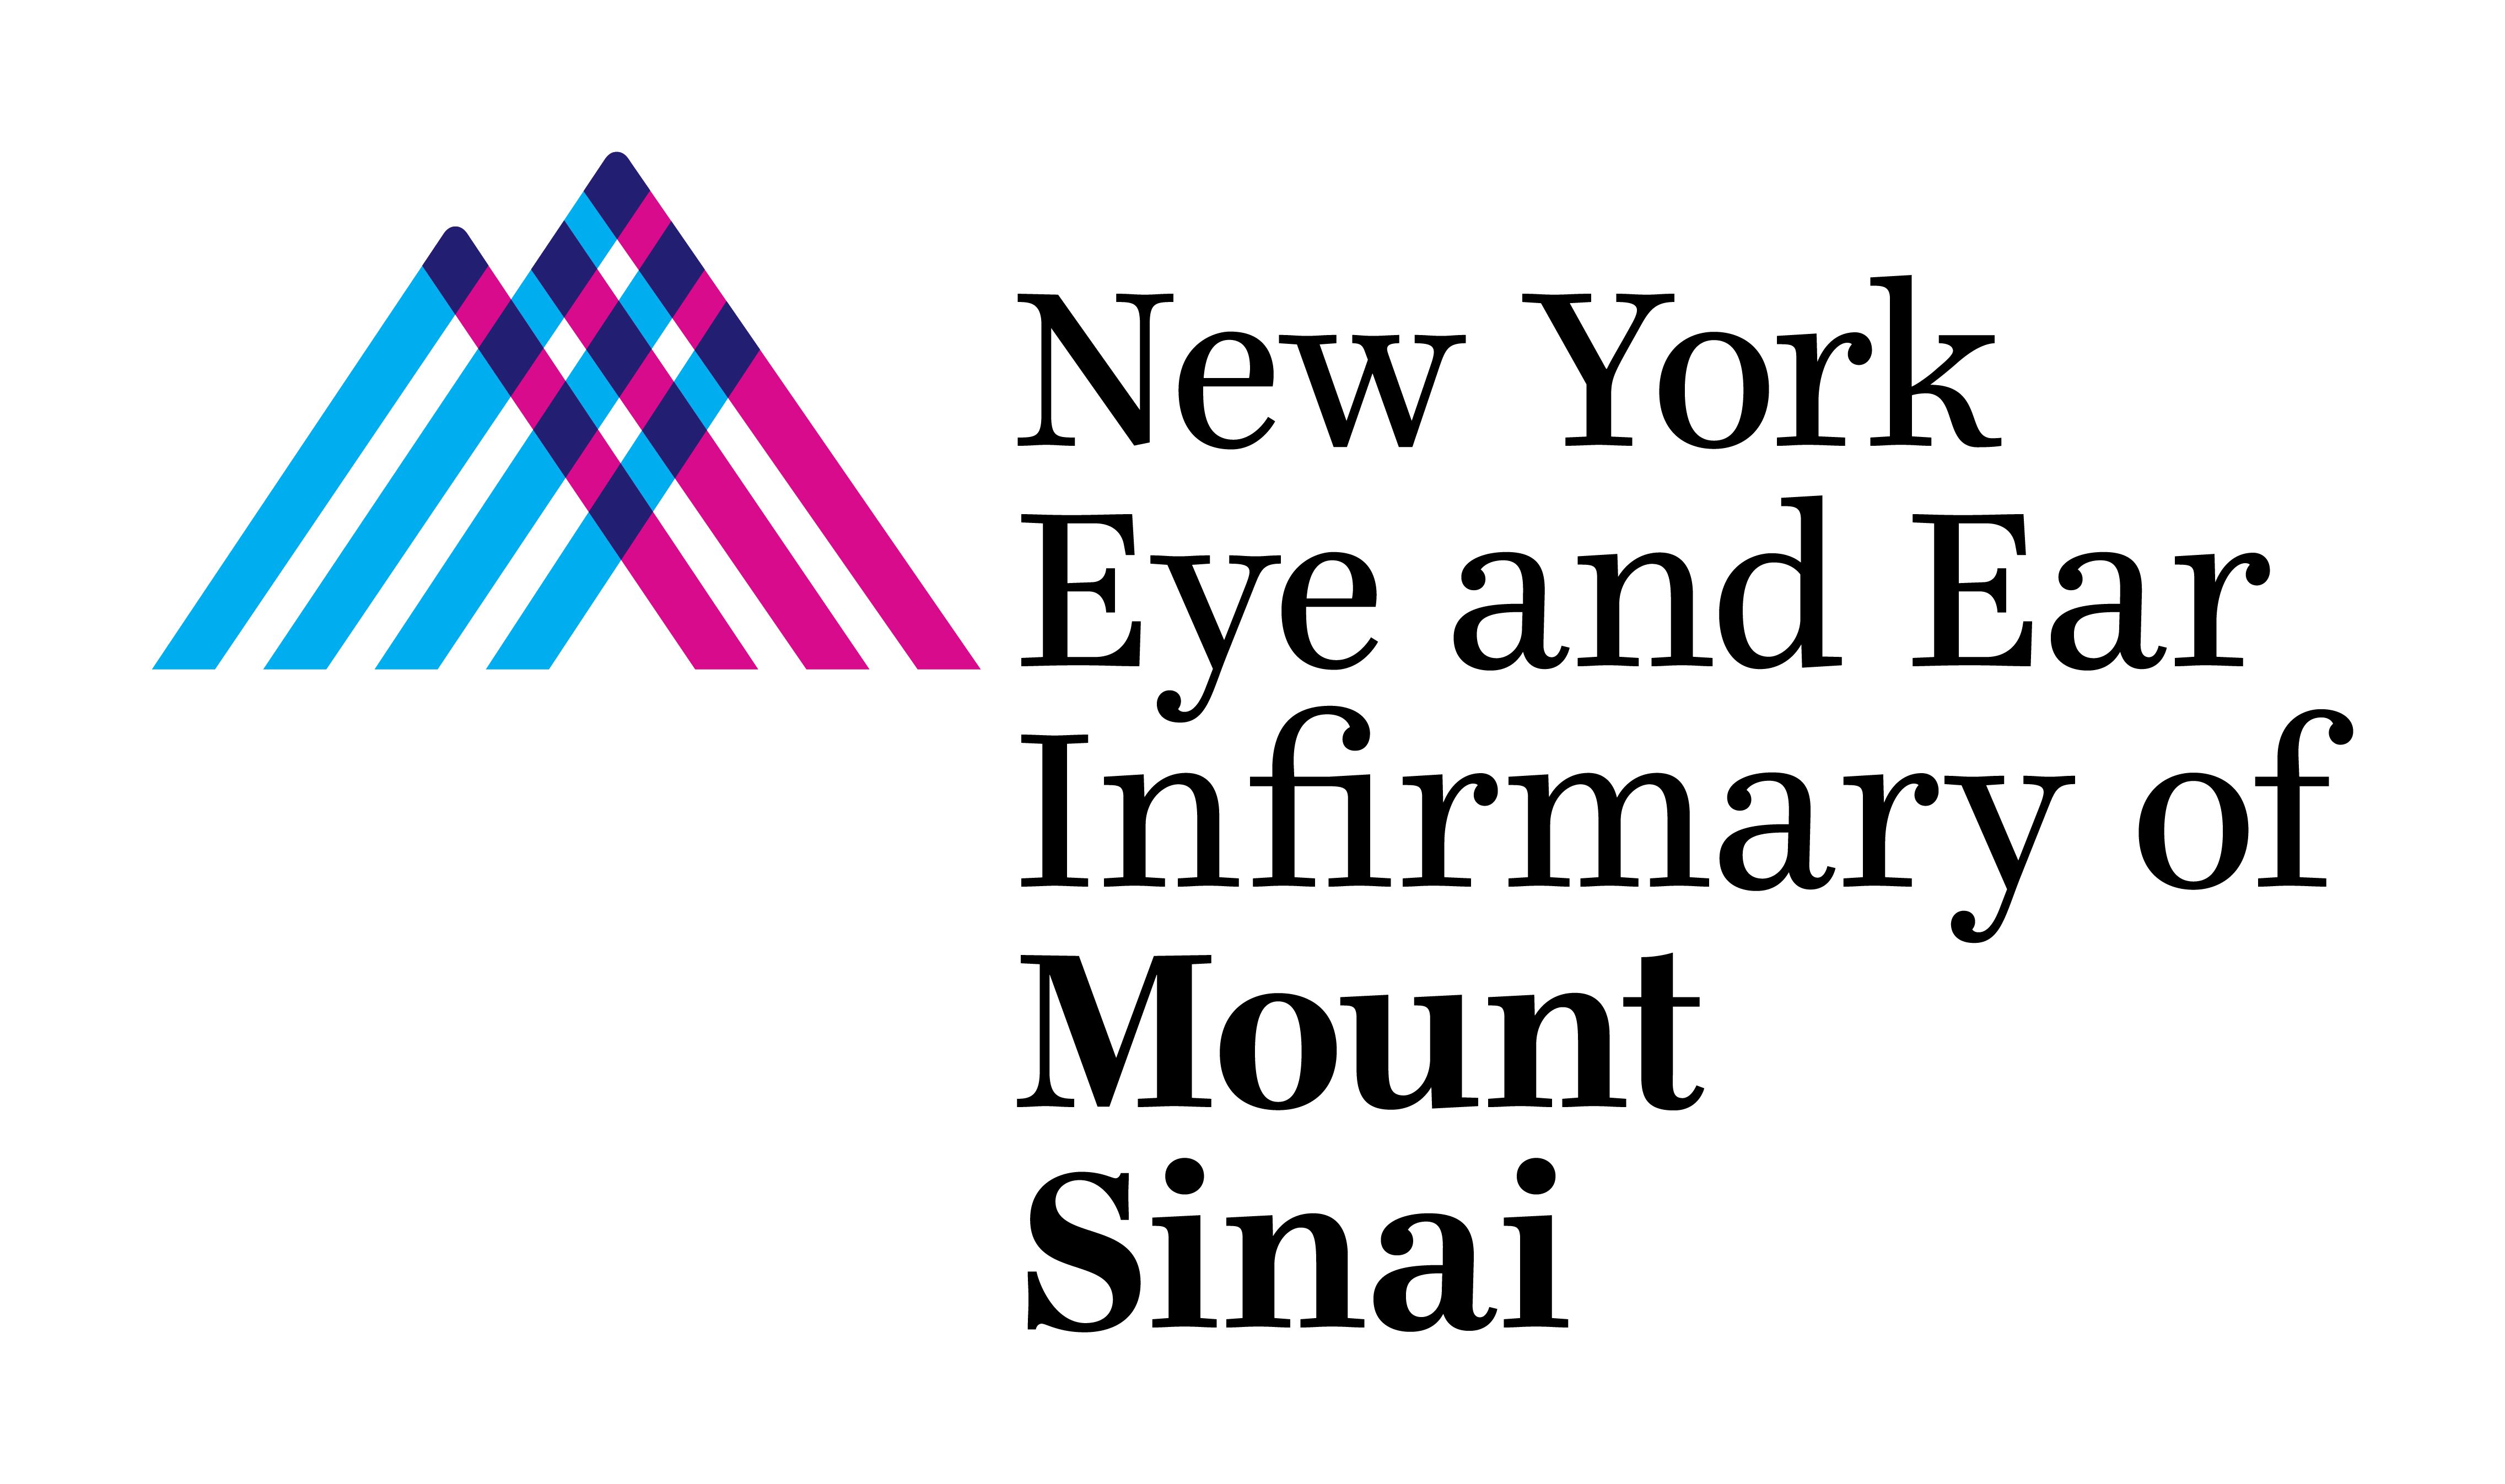 New York Eye and Ear Infirmary of Mount Sinai